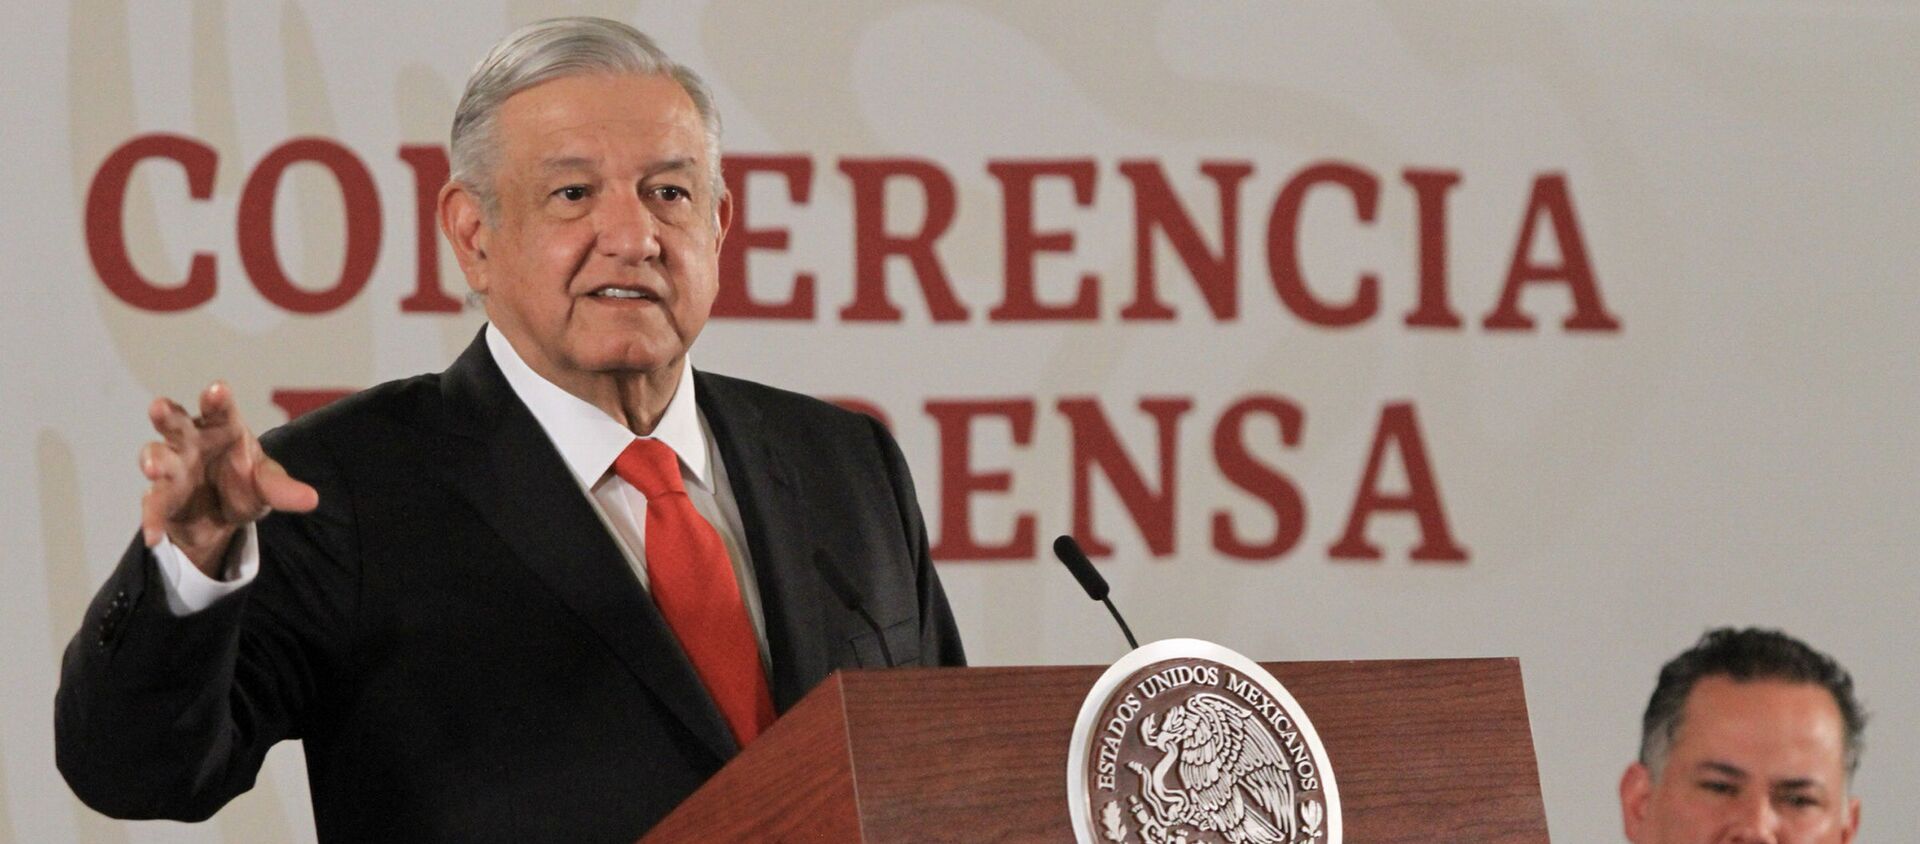 Andrés Manuel López Obrador, el presidente de México - Sputnik Mundo, 1920, 22.12.2020